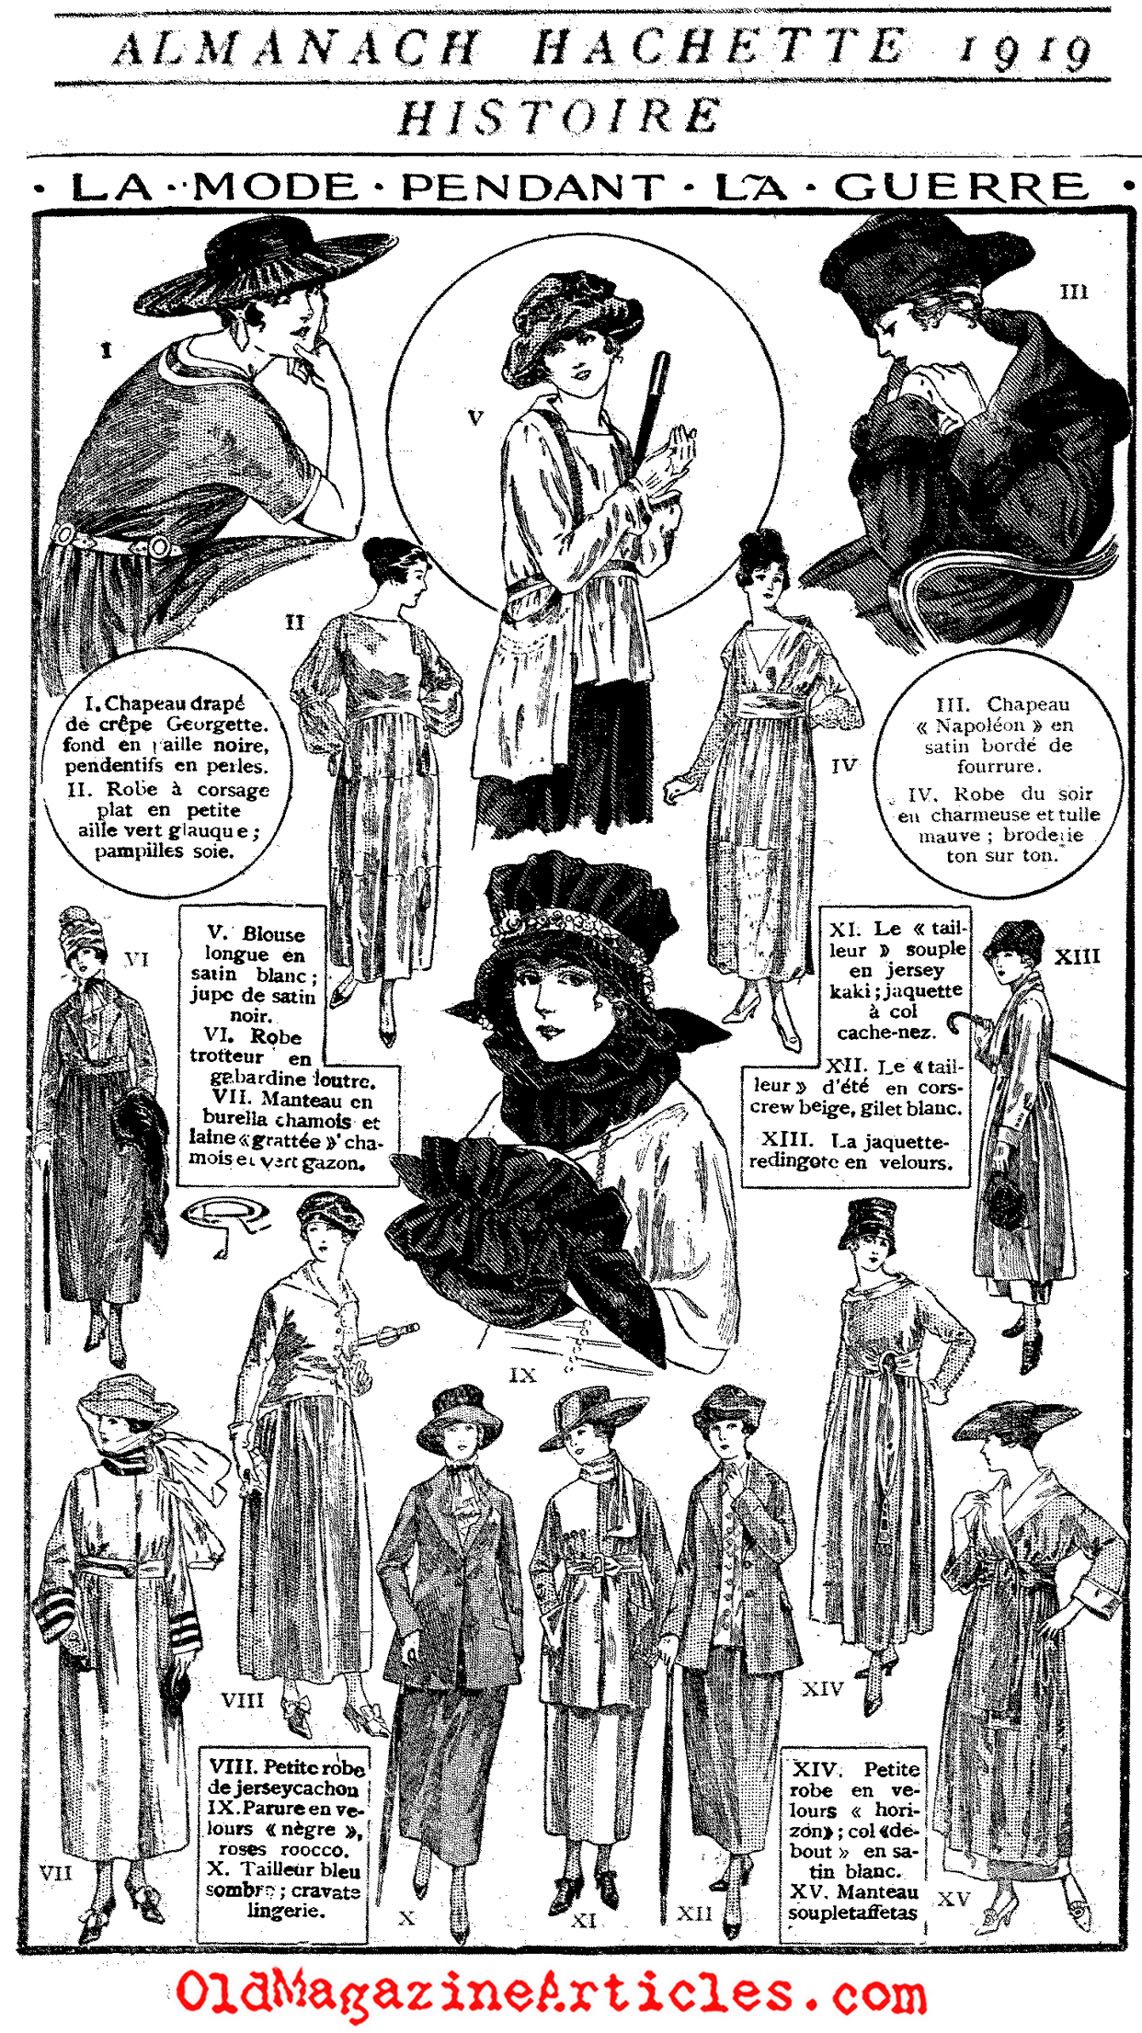 French Fashion During the War (Almanach Hachette, 1919)